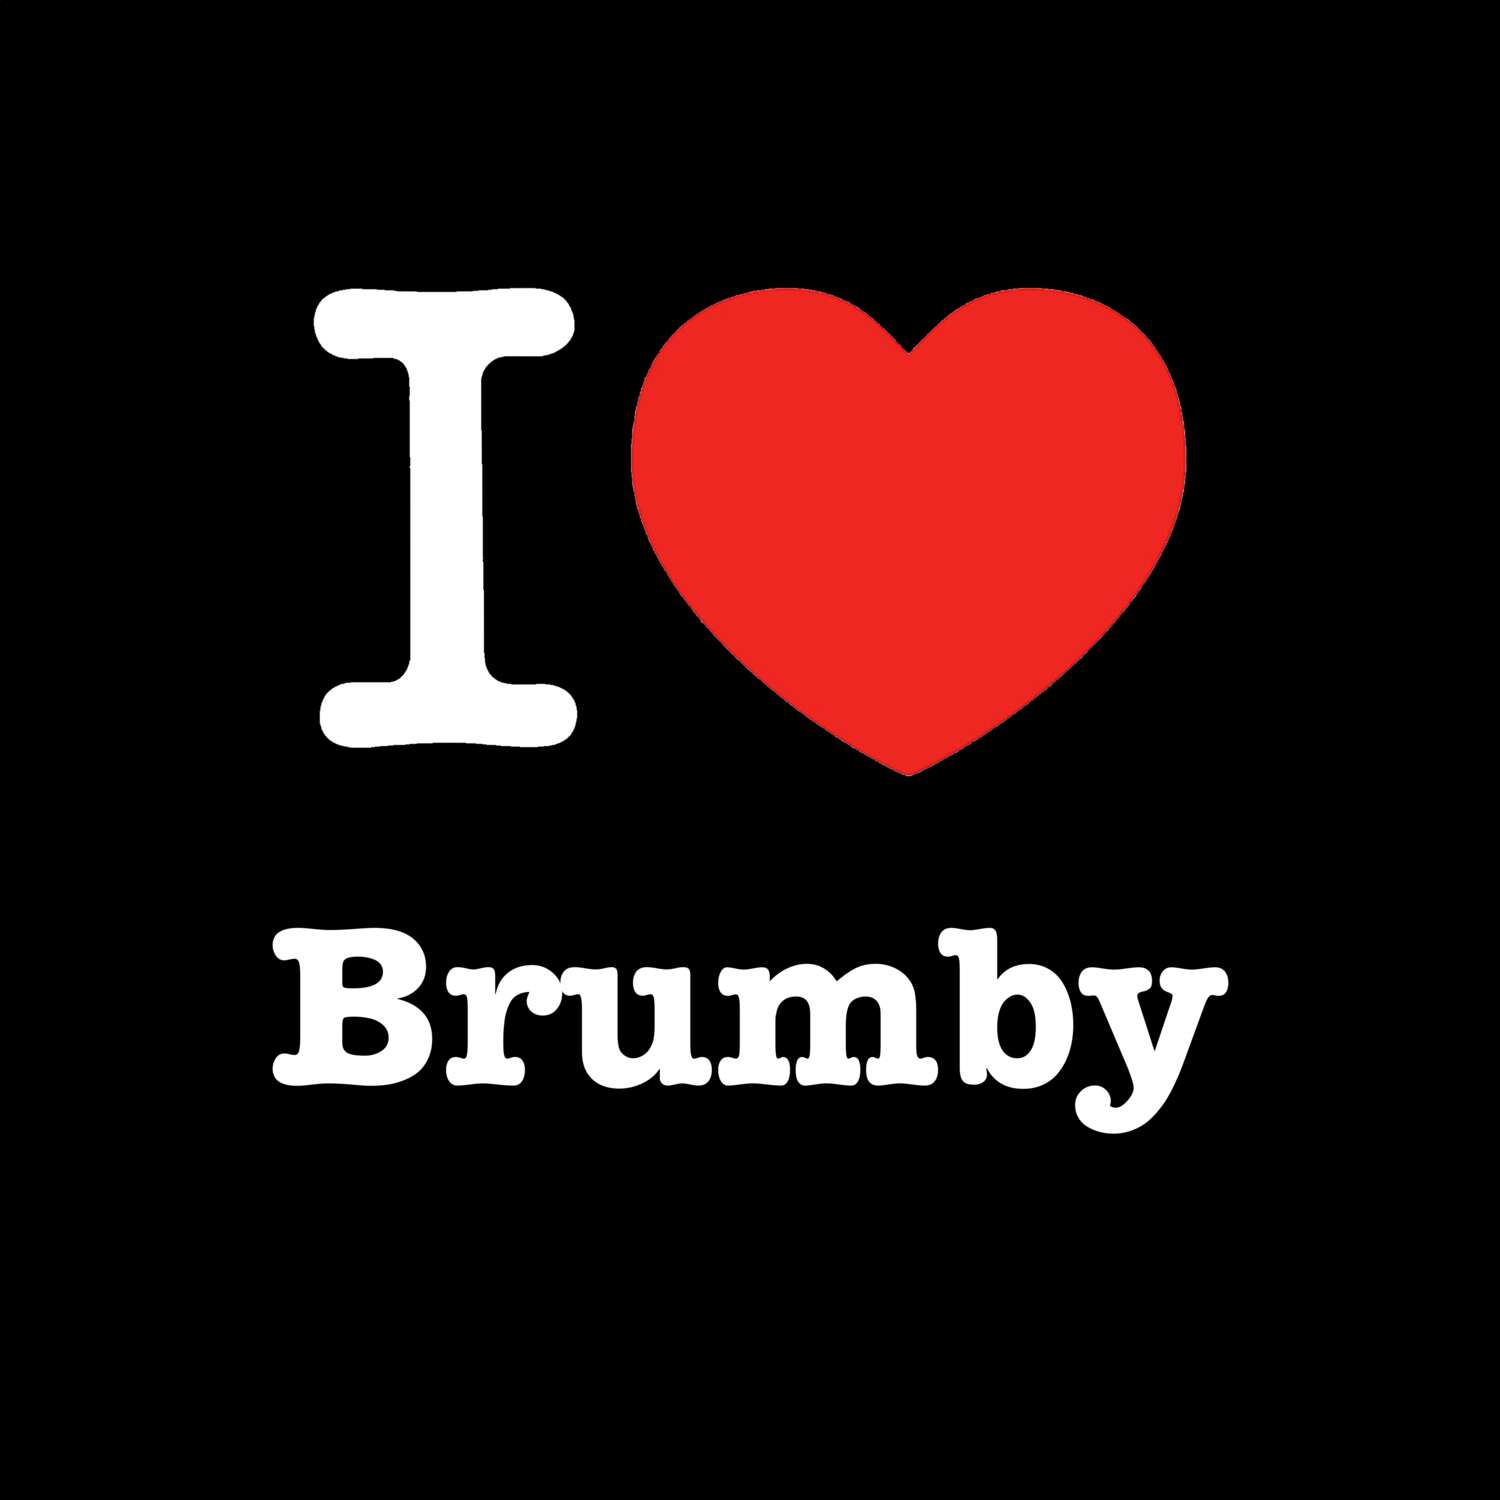 Brumby T-Shirt »I love«